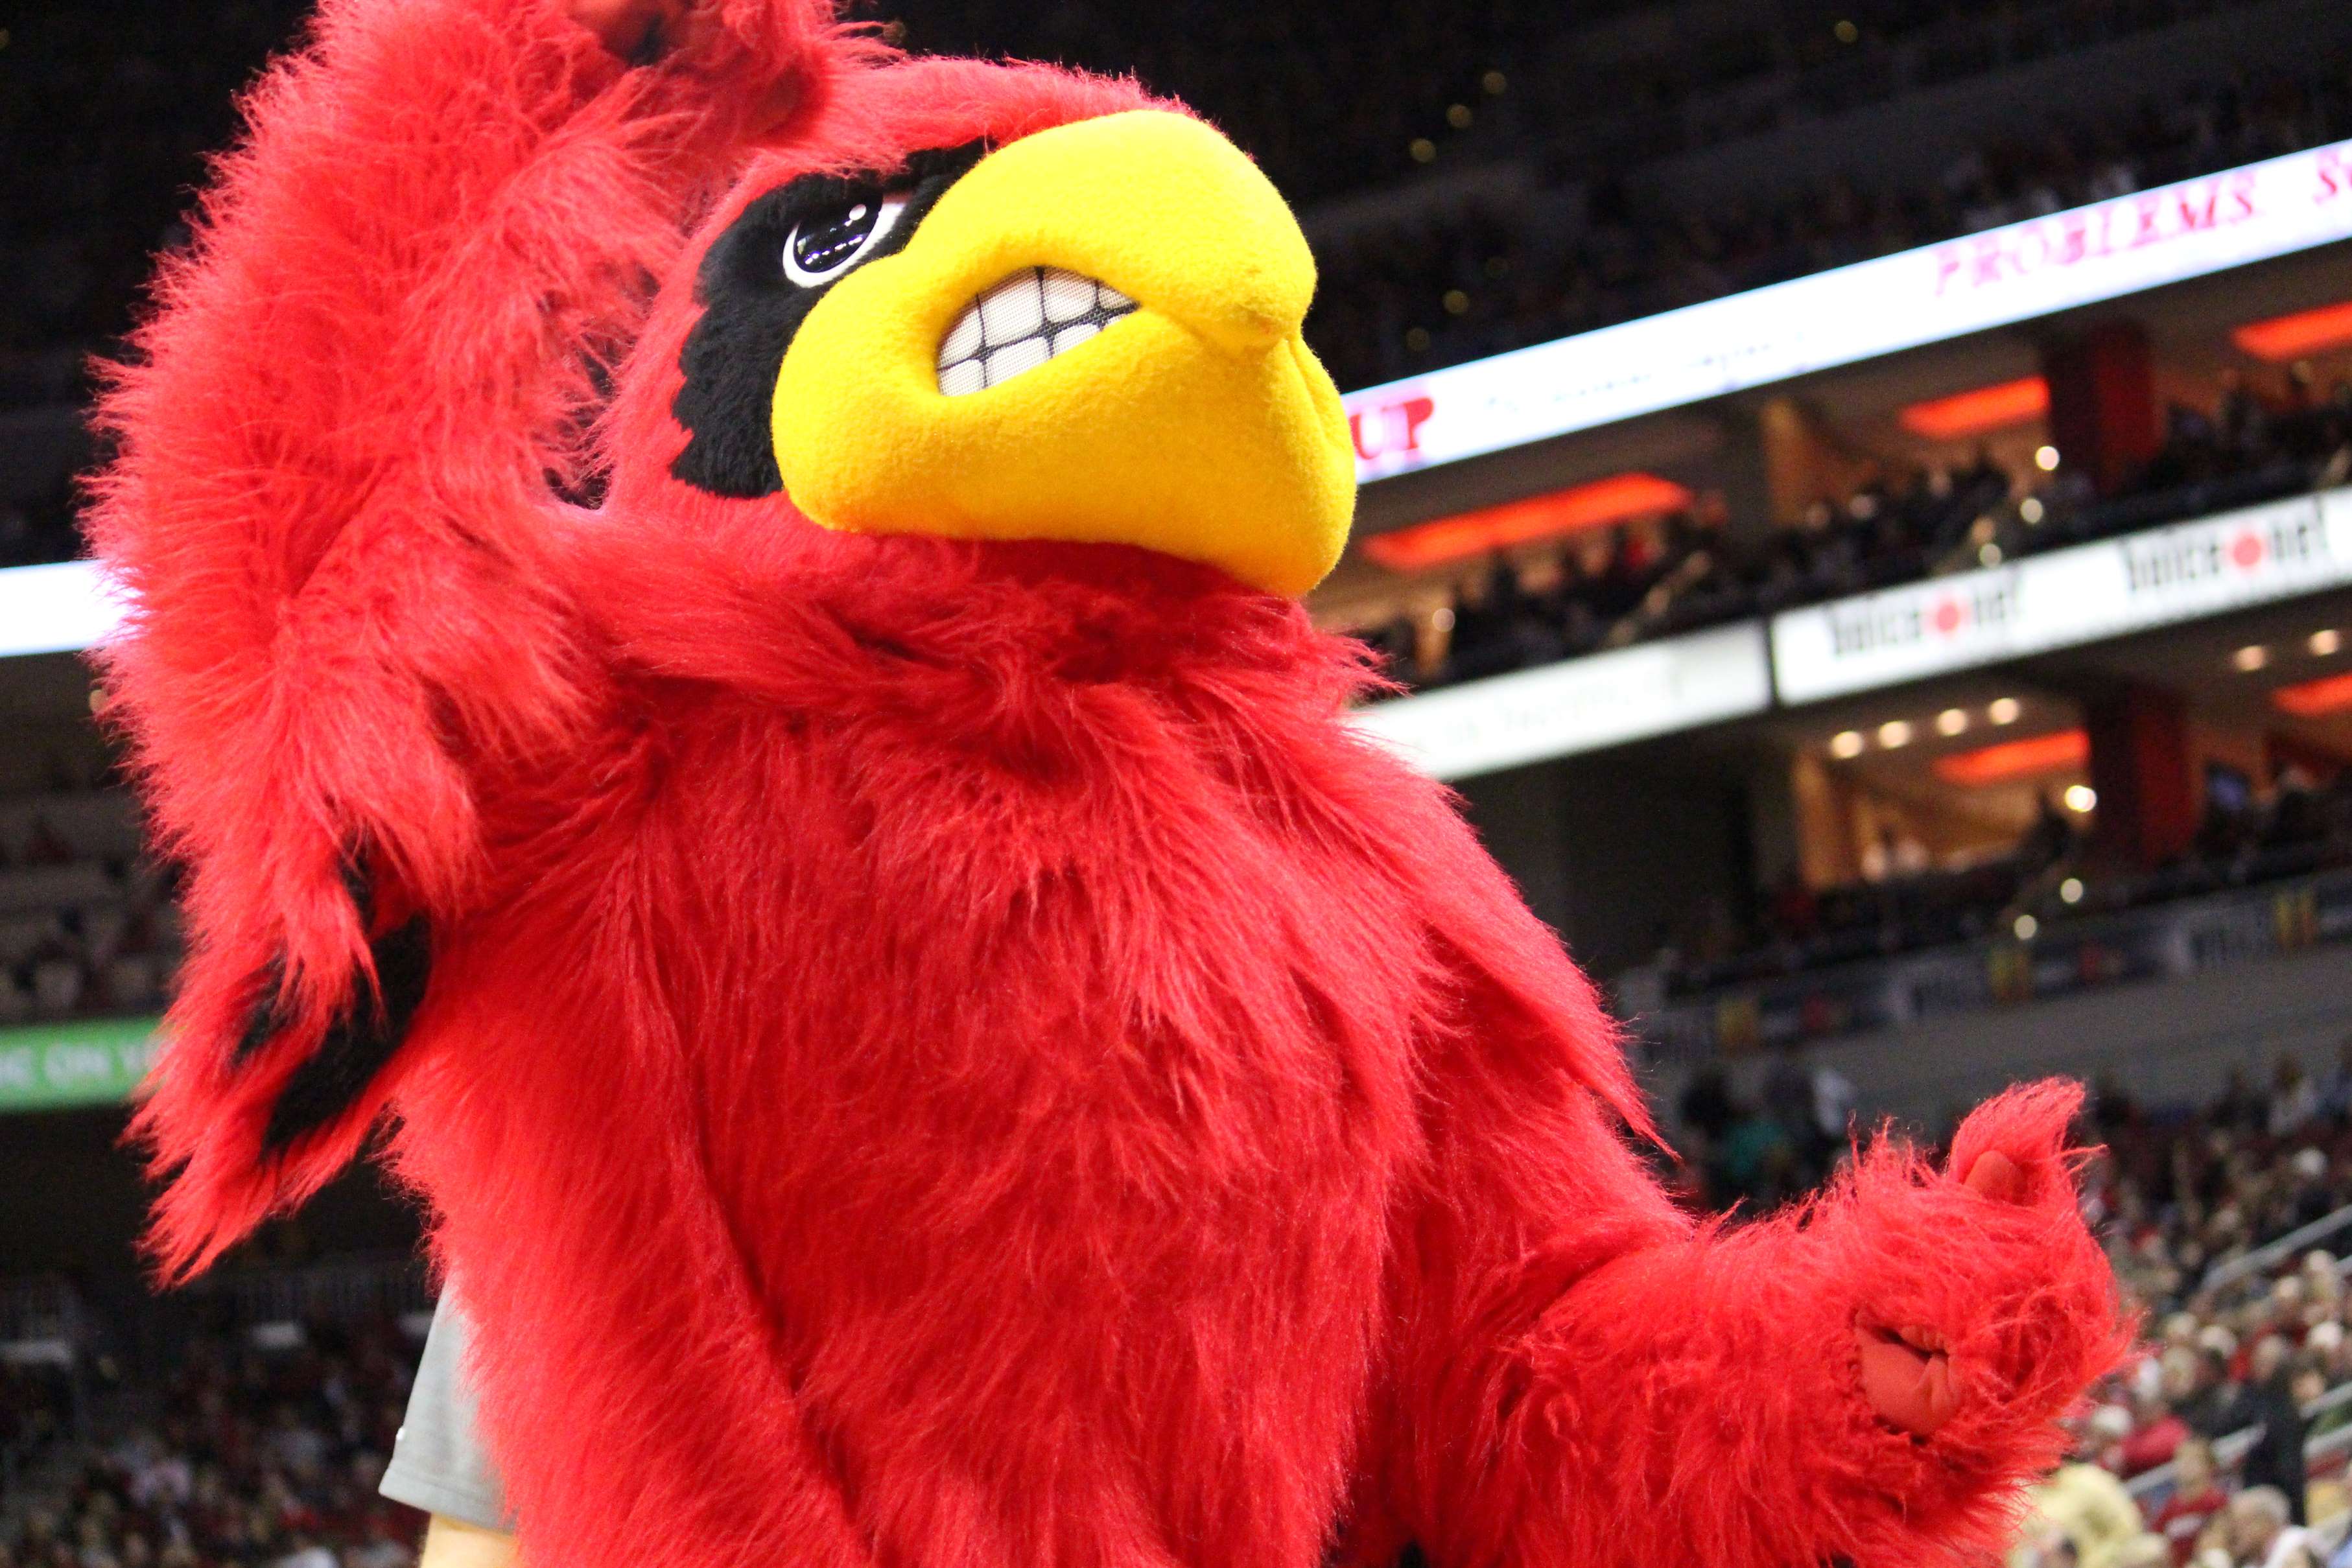 Louie the Cardinal Louisville Basketball Bird Photo by Mike Lindsay